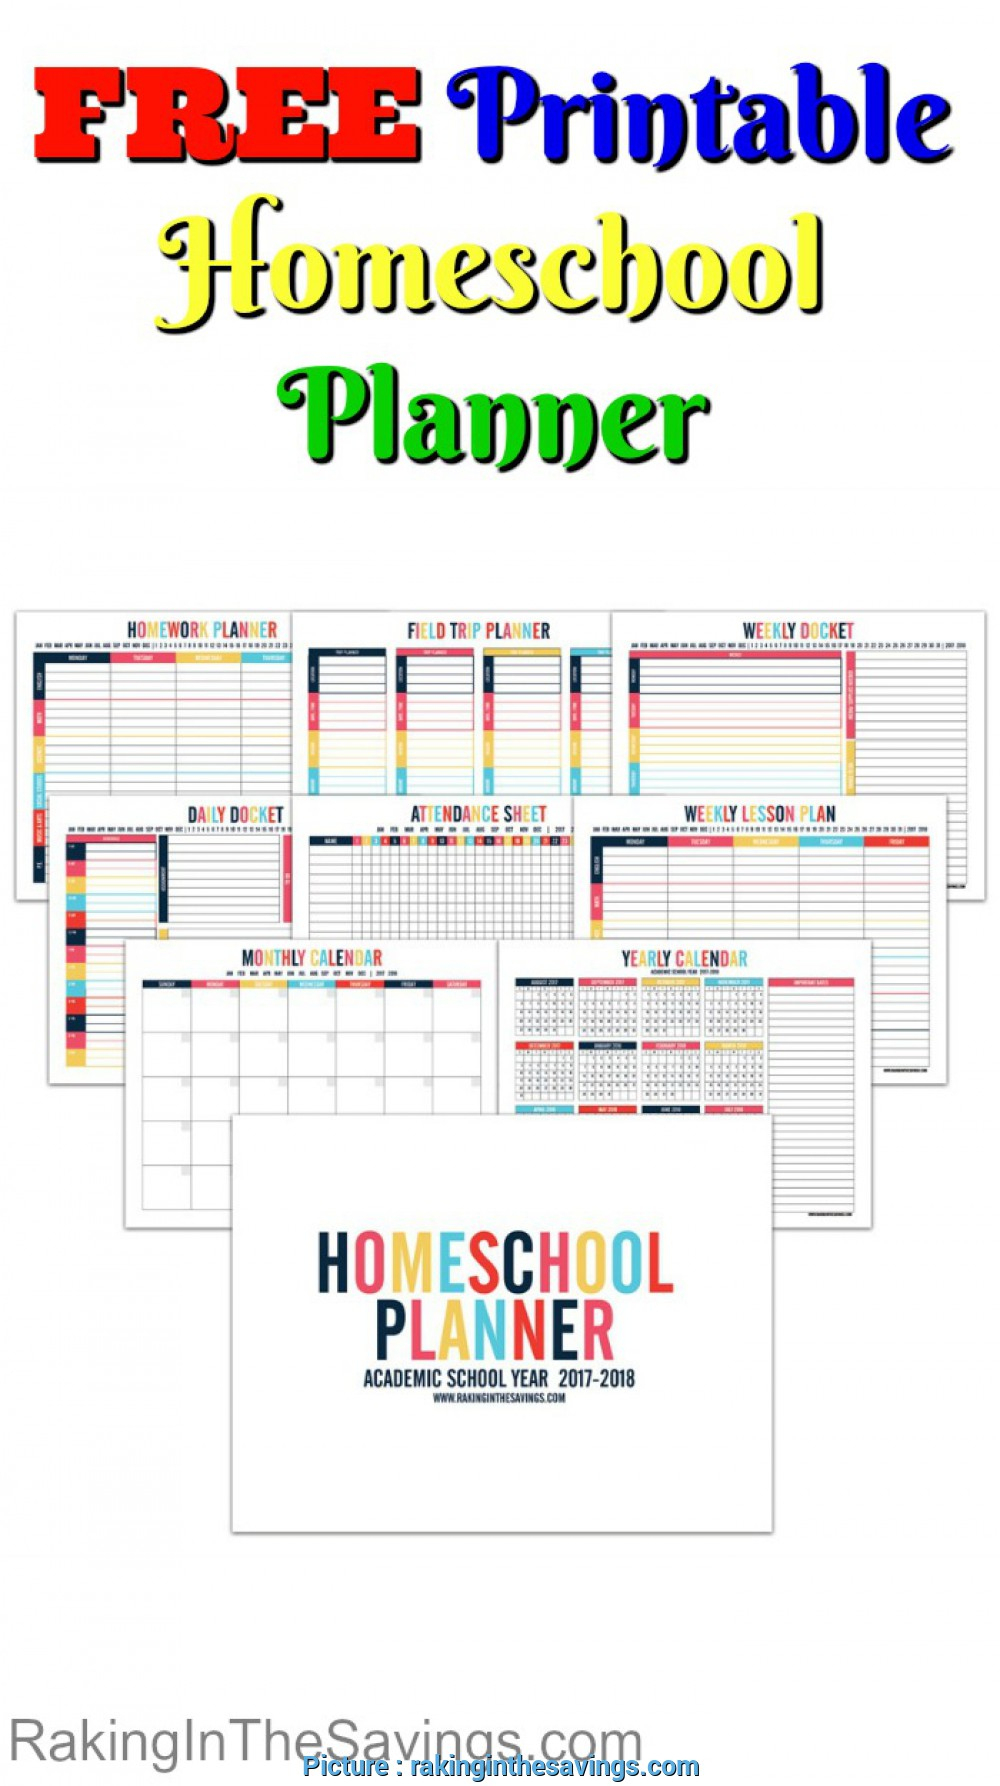 7 Creative Homeschool Lesson Planner Printable Collections - Maidan - Homeschool Lesson Planner Free Printable